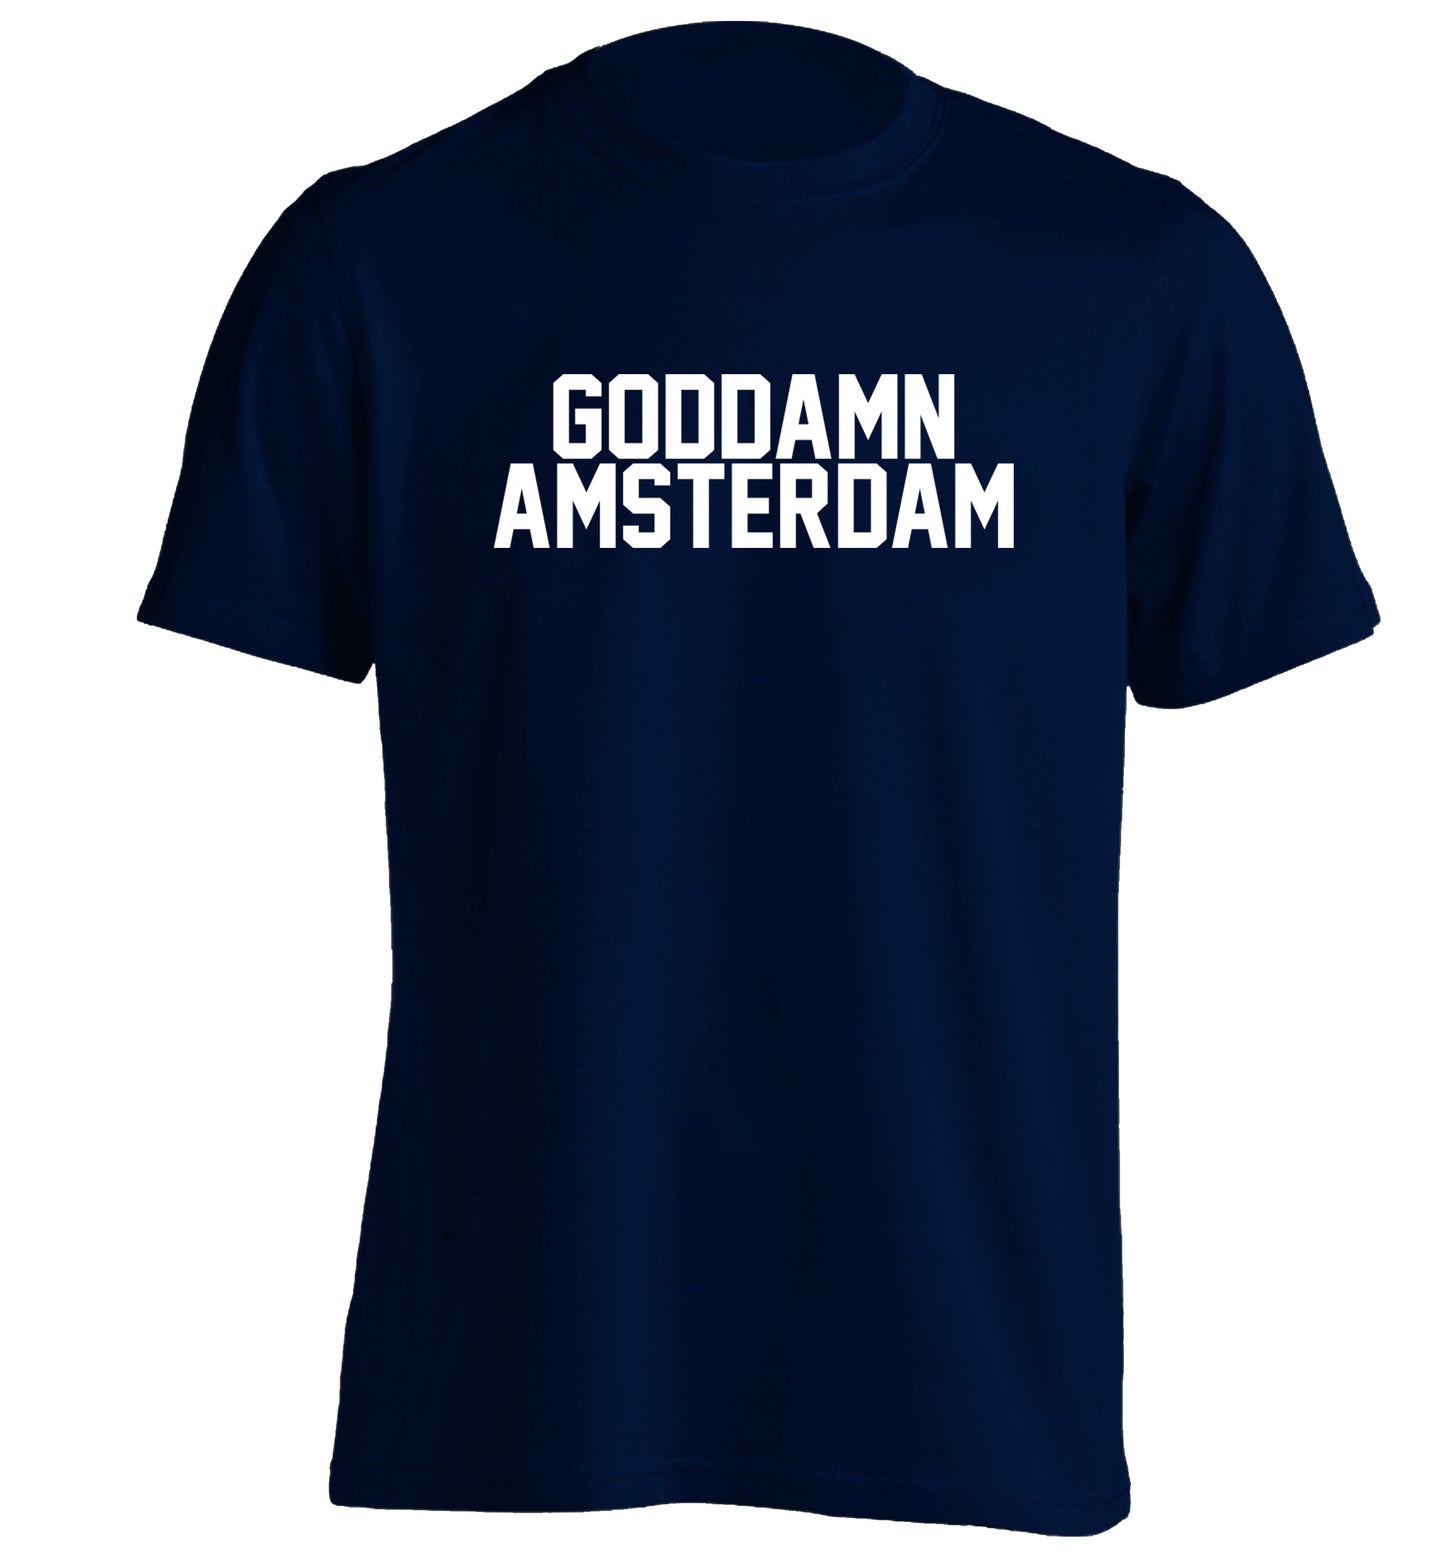 Goddamn Amsterdam adults unisex navy Tshirt 2XL